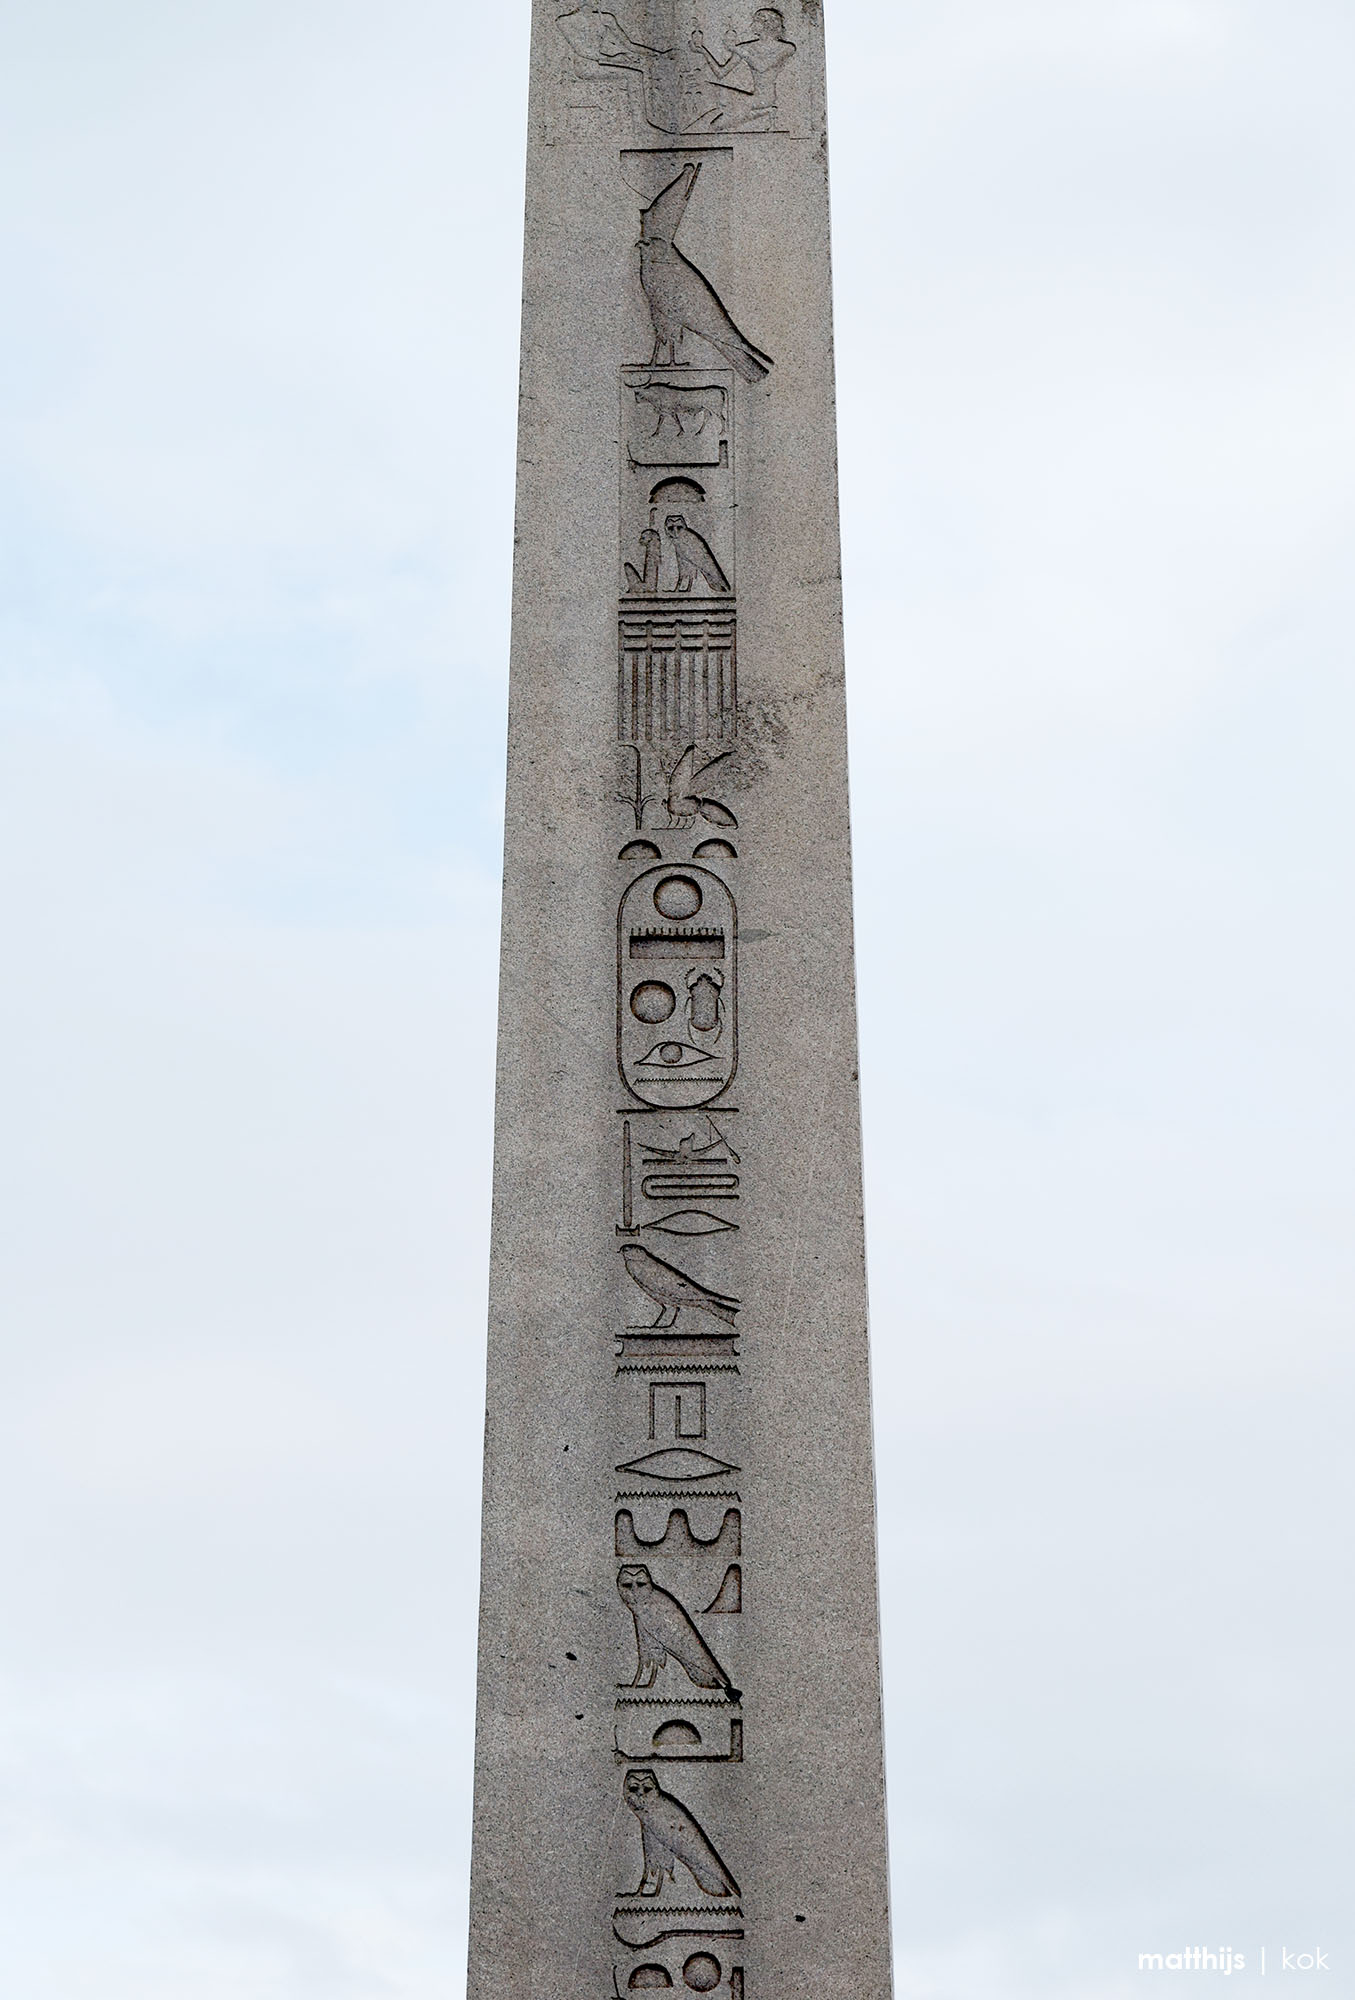 Obelisk of Theodosius, Istanbul, Türkiye | Photo by Matthijs Kok